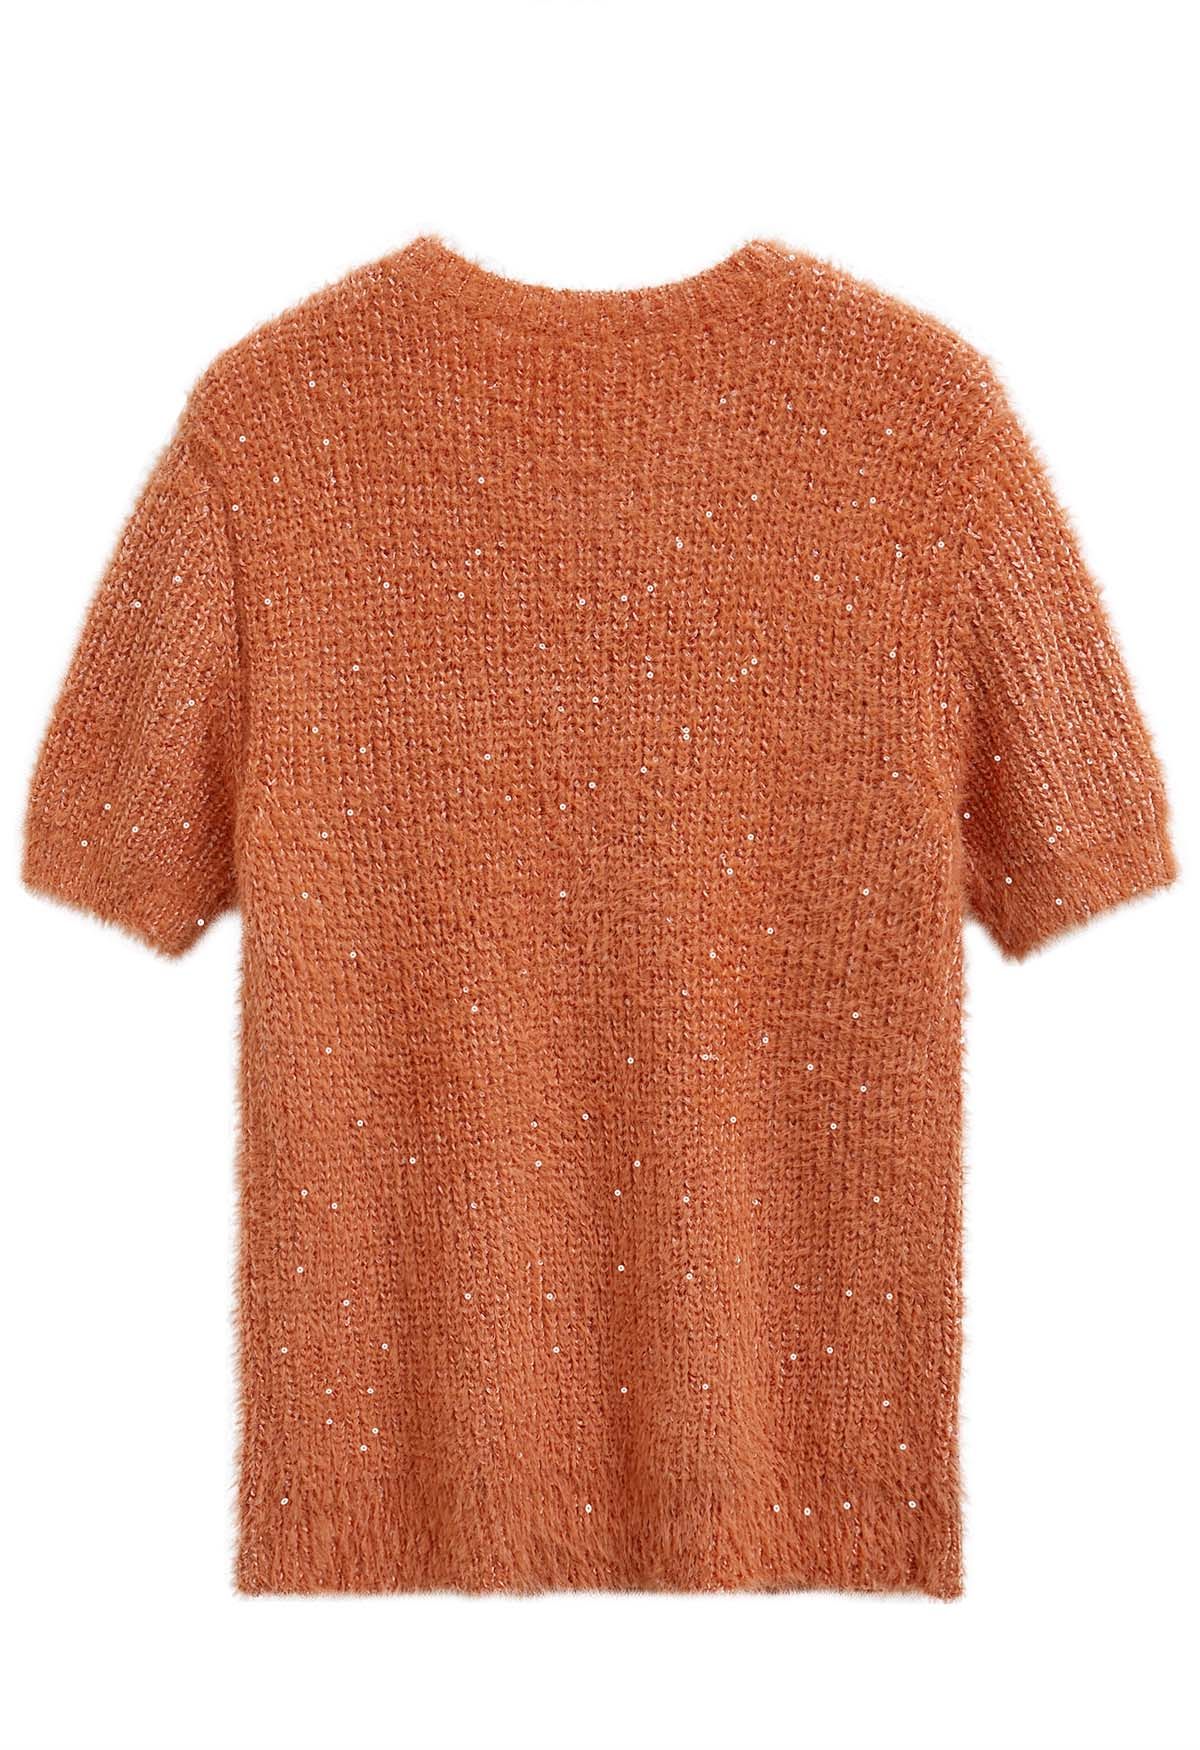 Sequin Fuzzy Short Sleeve Sweater in Orange